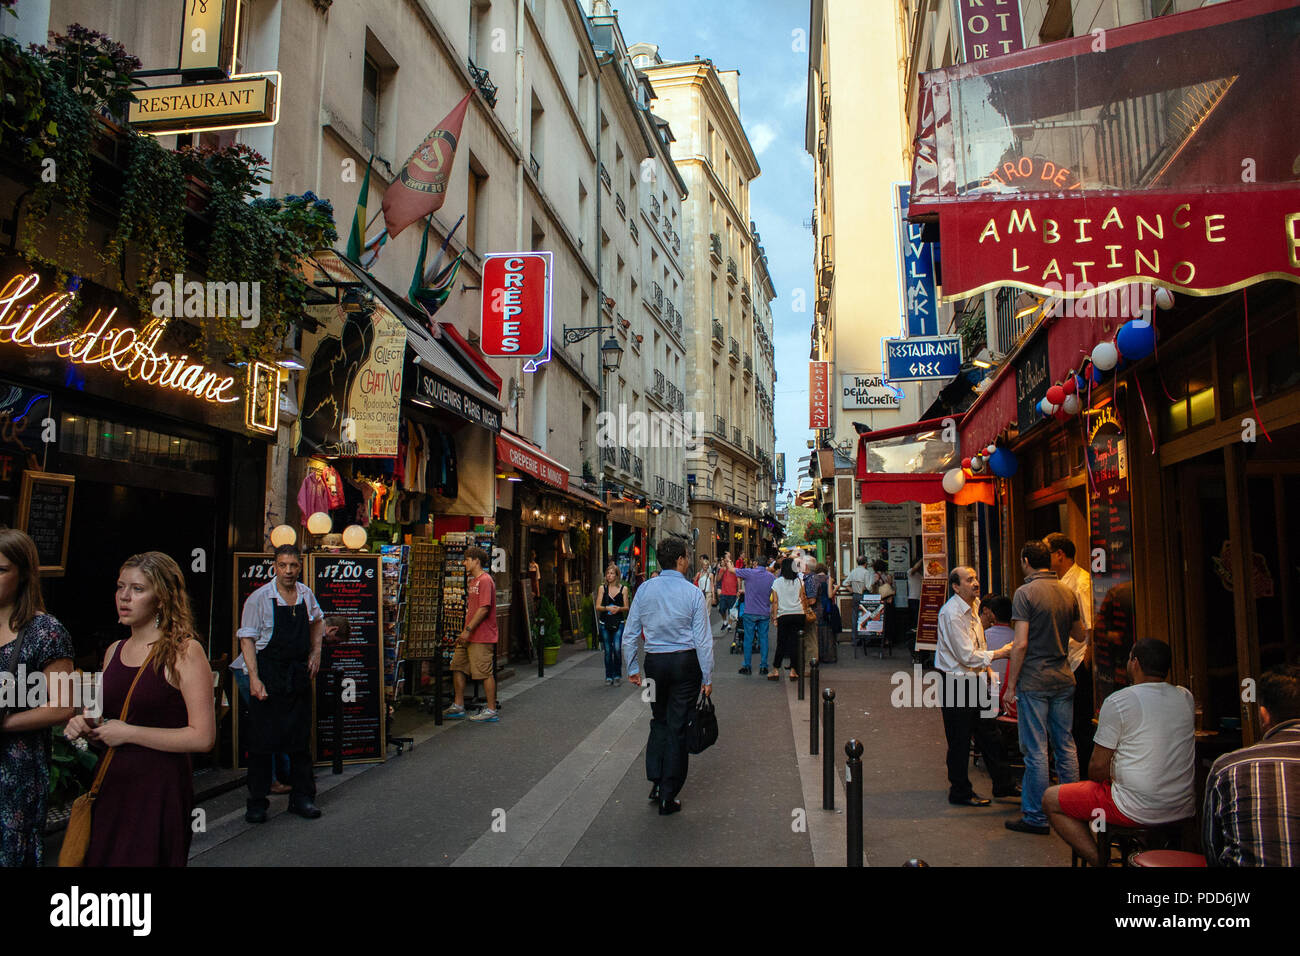 Affollato bar su una strada commerciale a Parigi Foto Stock